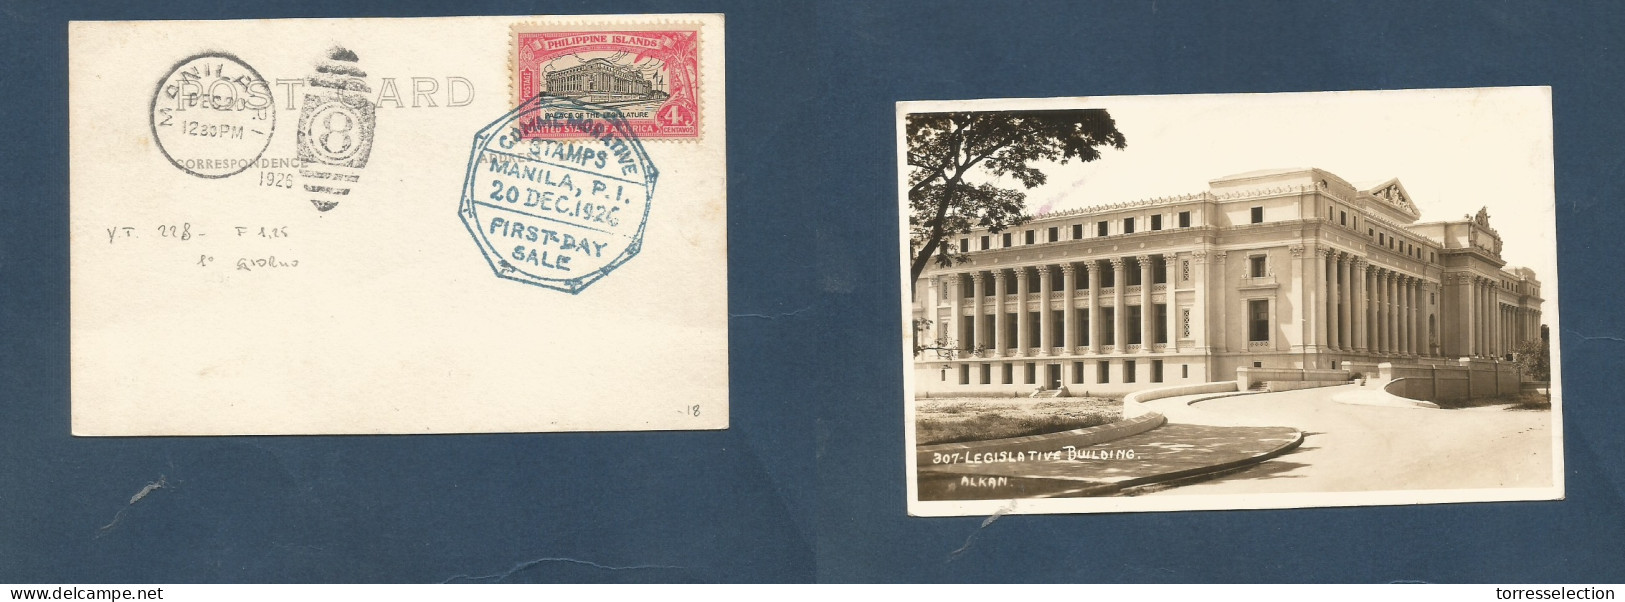 PHILIPPINES. 1926 (20 Dec) FDC. Comm Stamp Prefkd Alkan Photo Building. XSALE. - Philippines